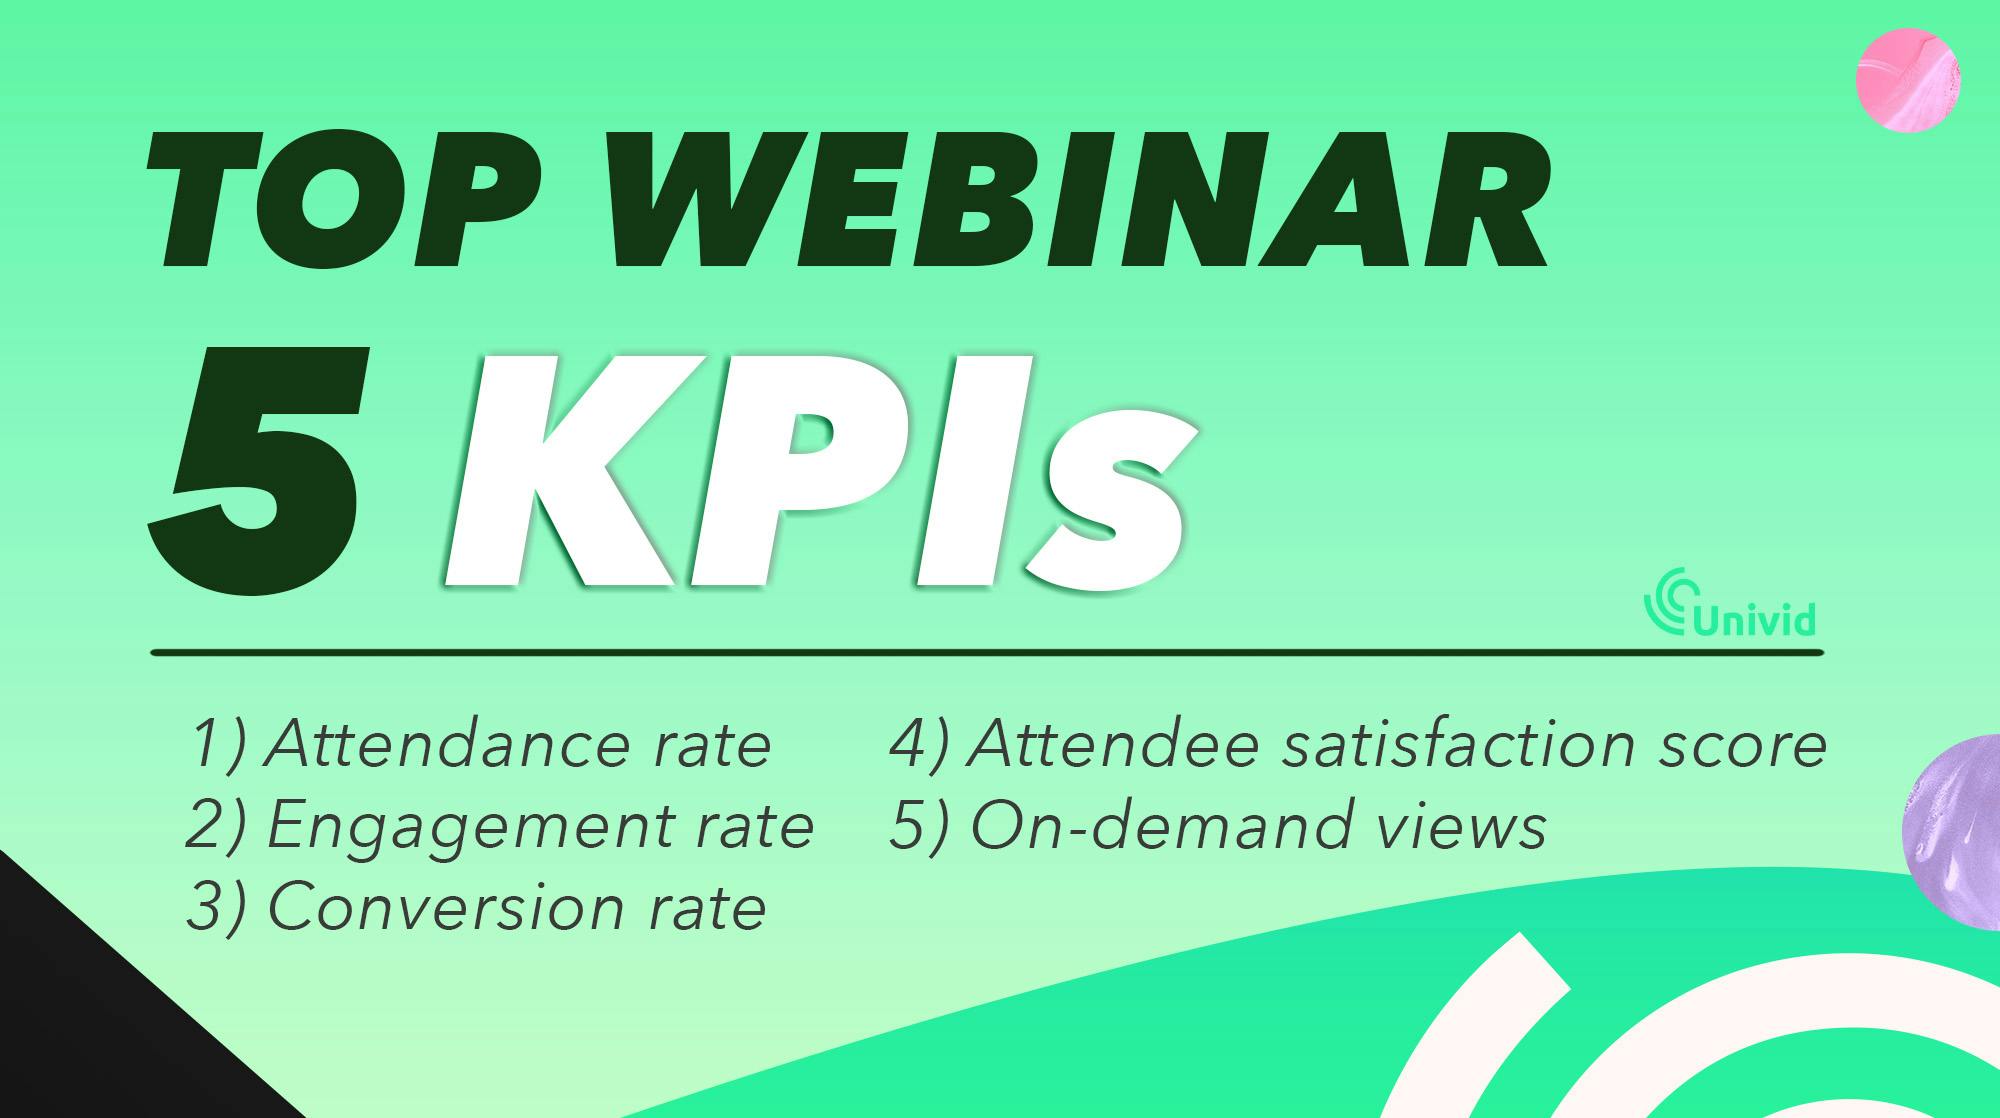 Top 5 webinar KPI:s